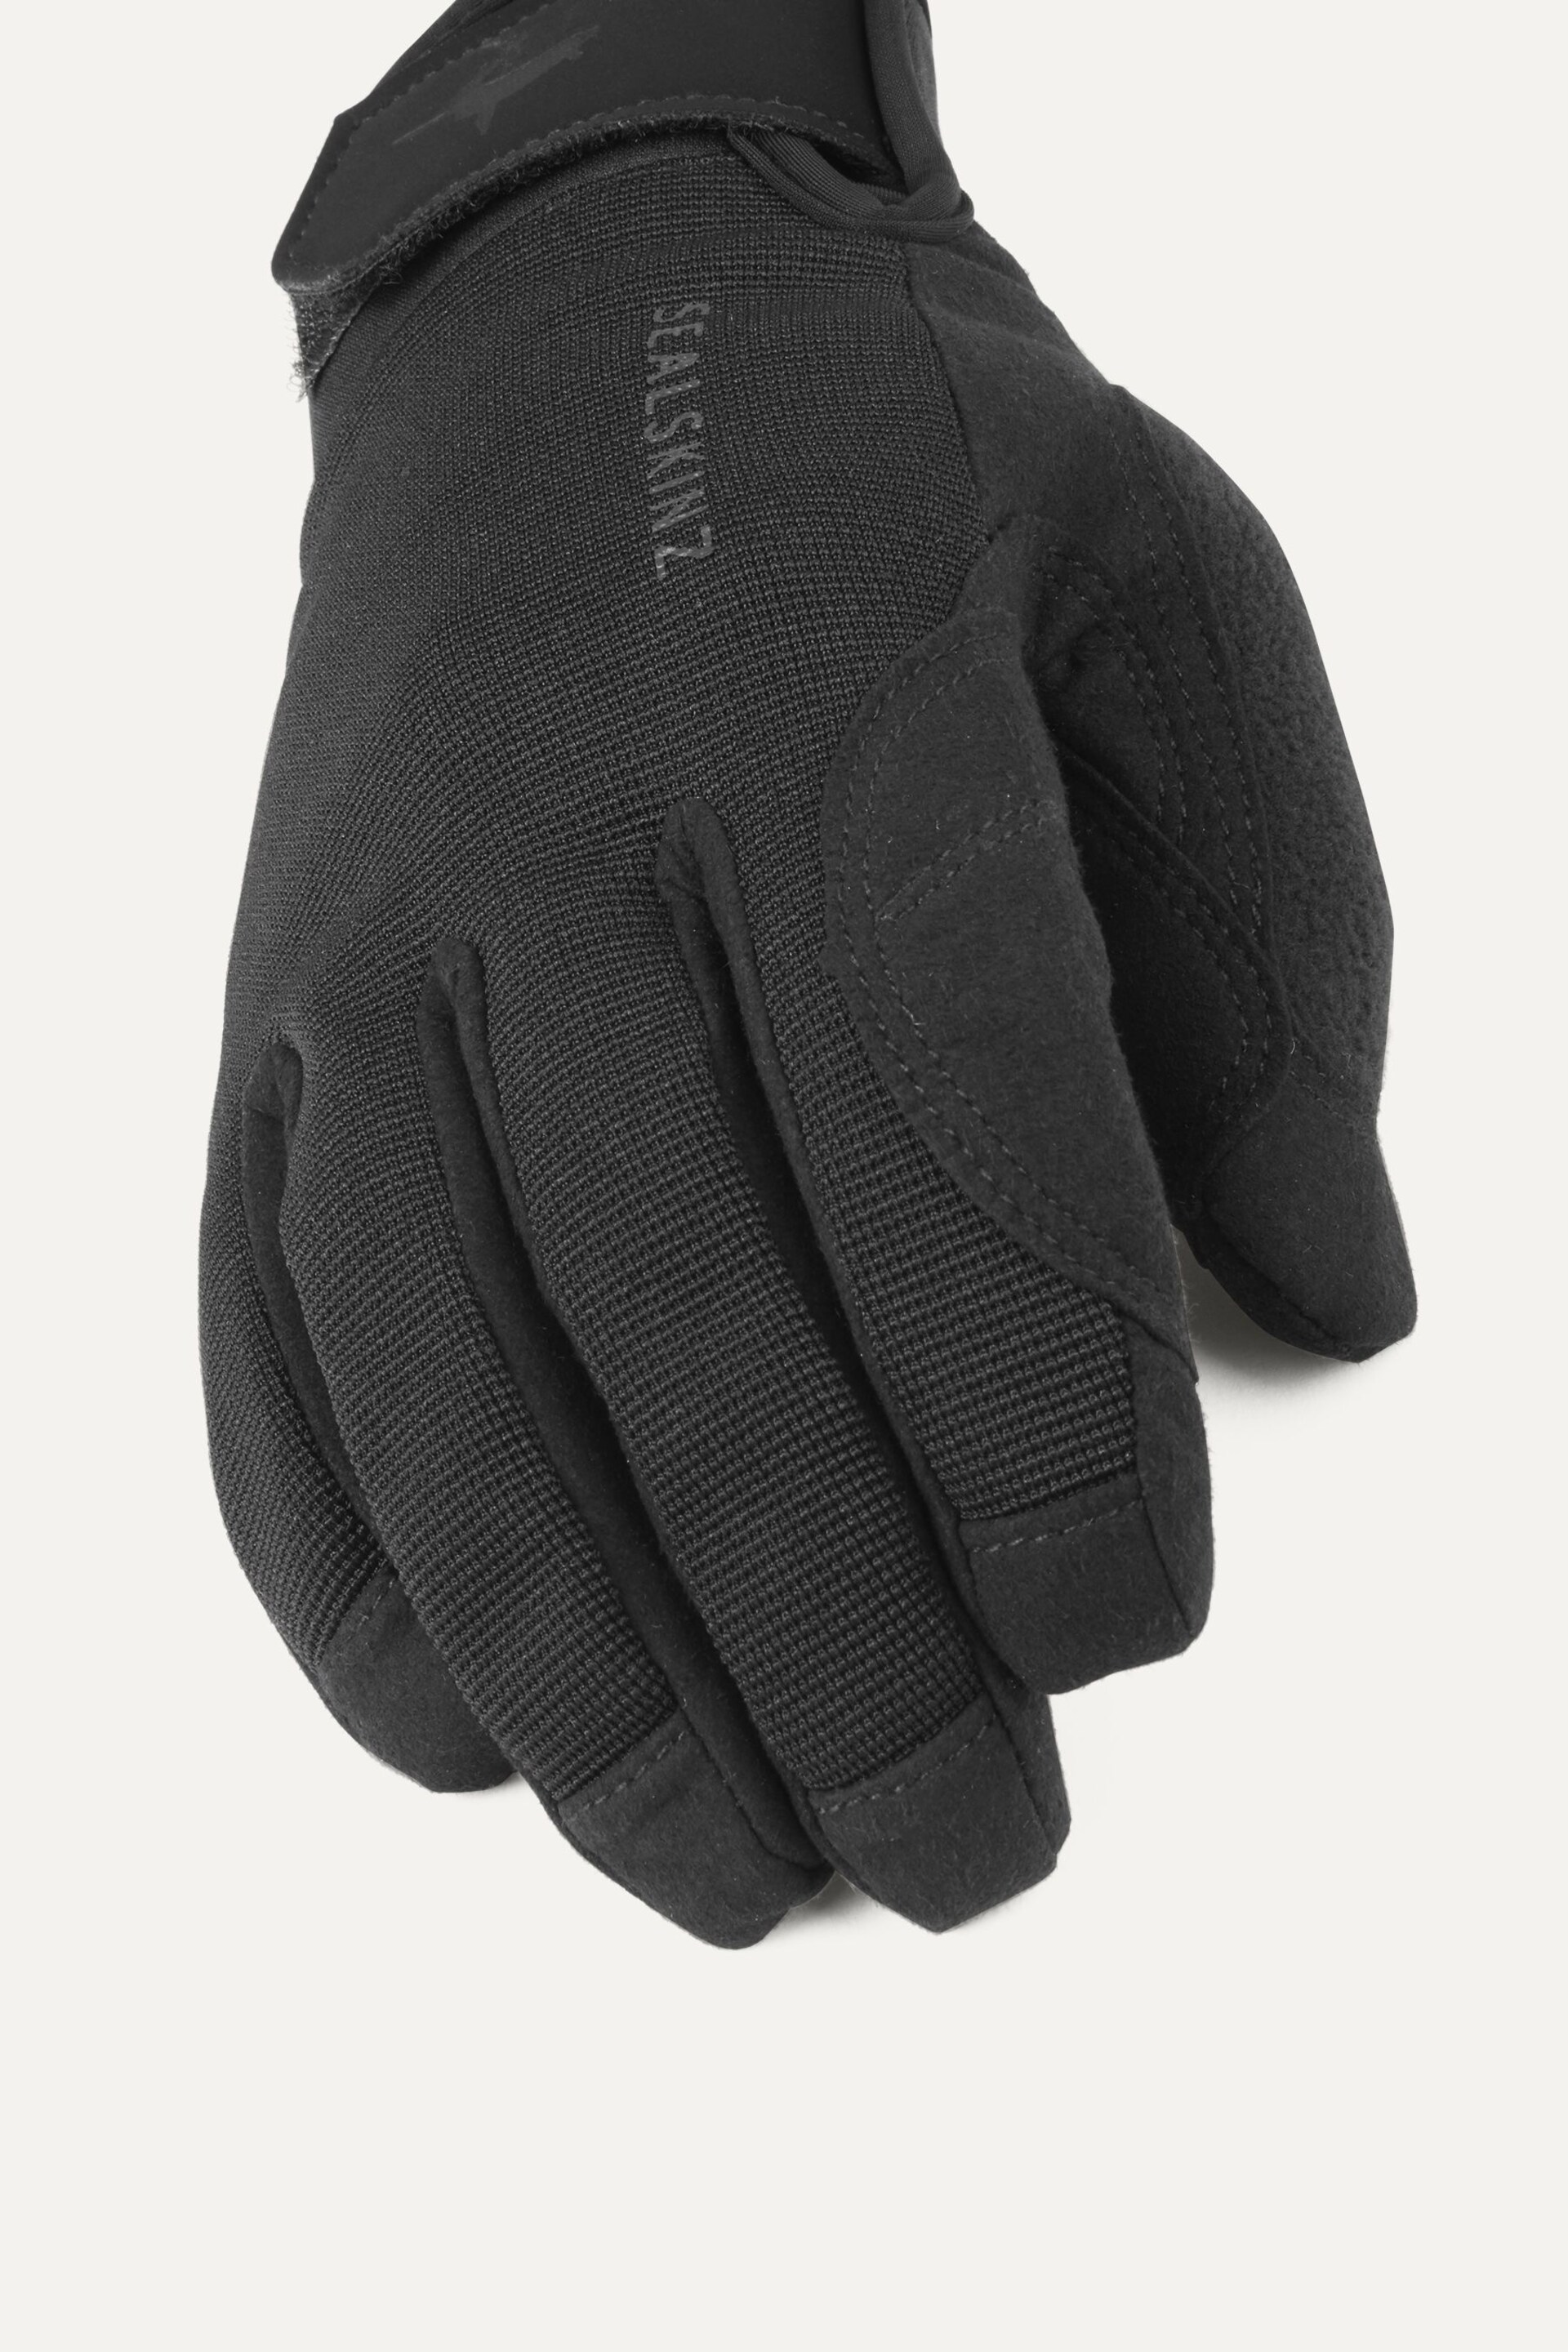 Sealskinz Harling Waterproof All Weather Black Gloves - Image 2 of 3